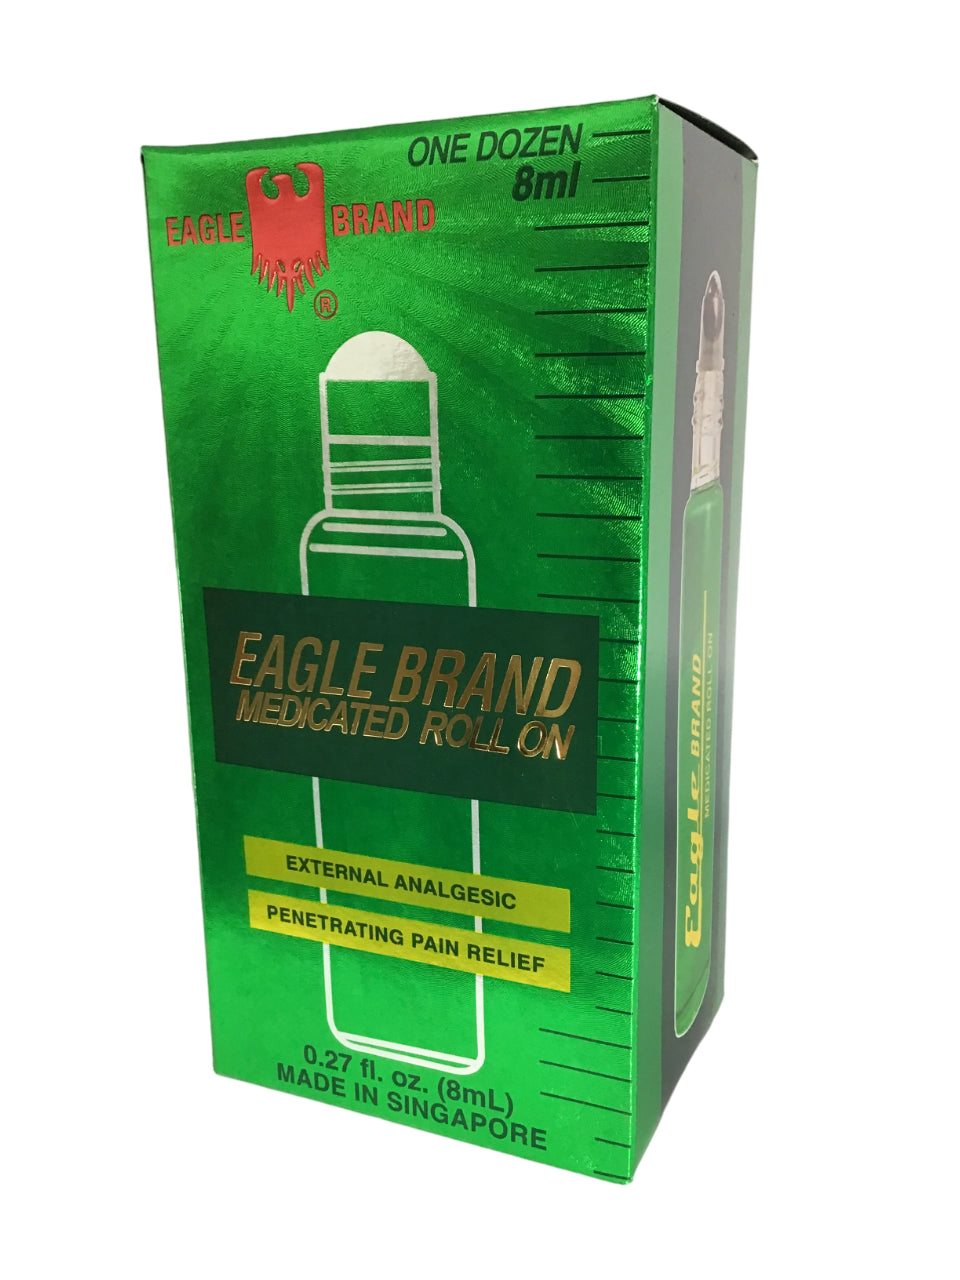 Eagle Brand Medicated Roll On (Green) 鷹牌藥用走珠